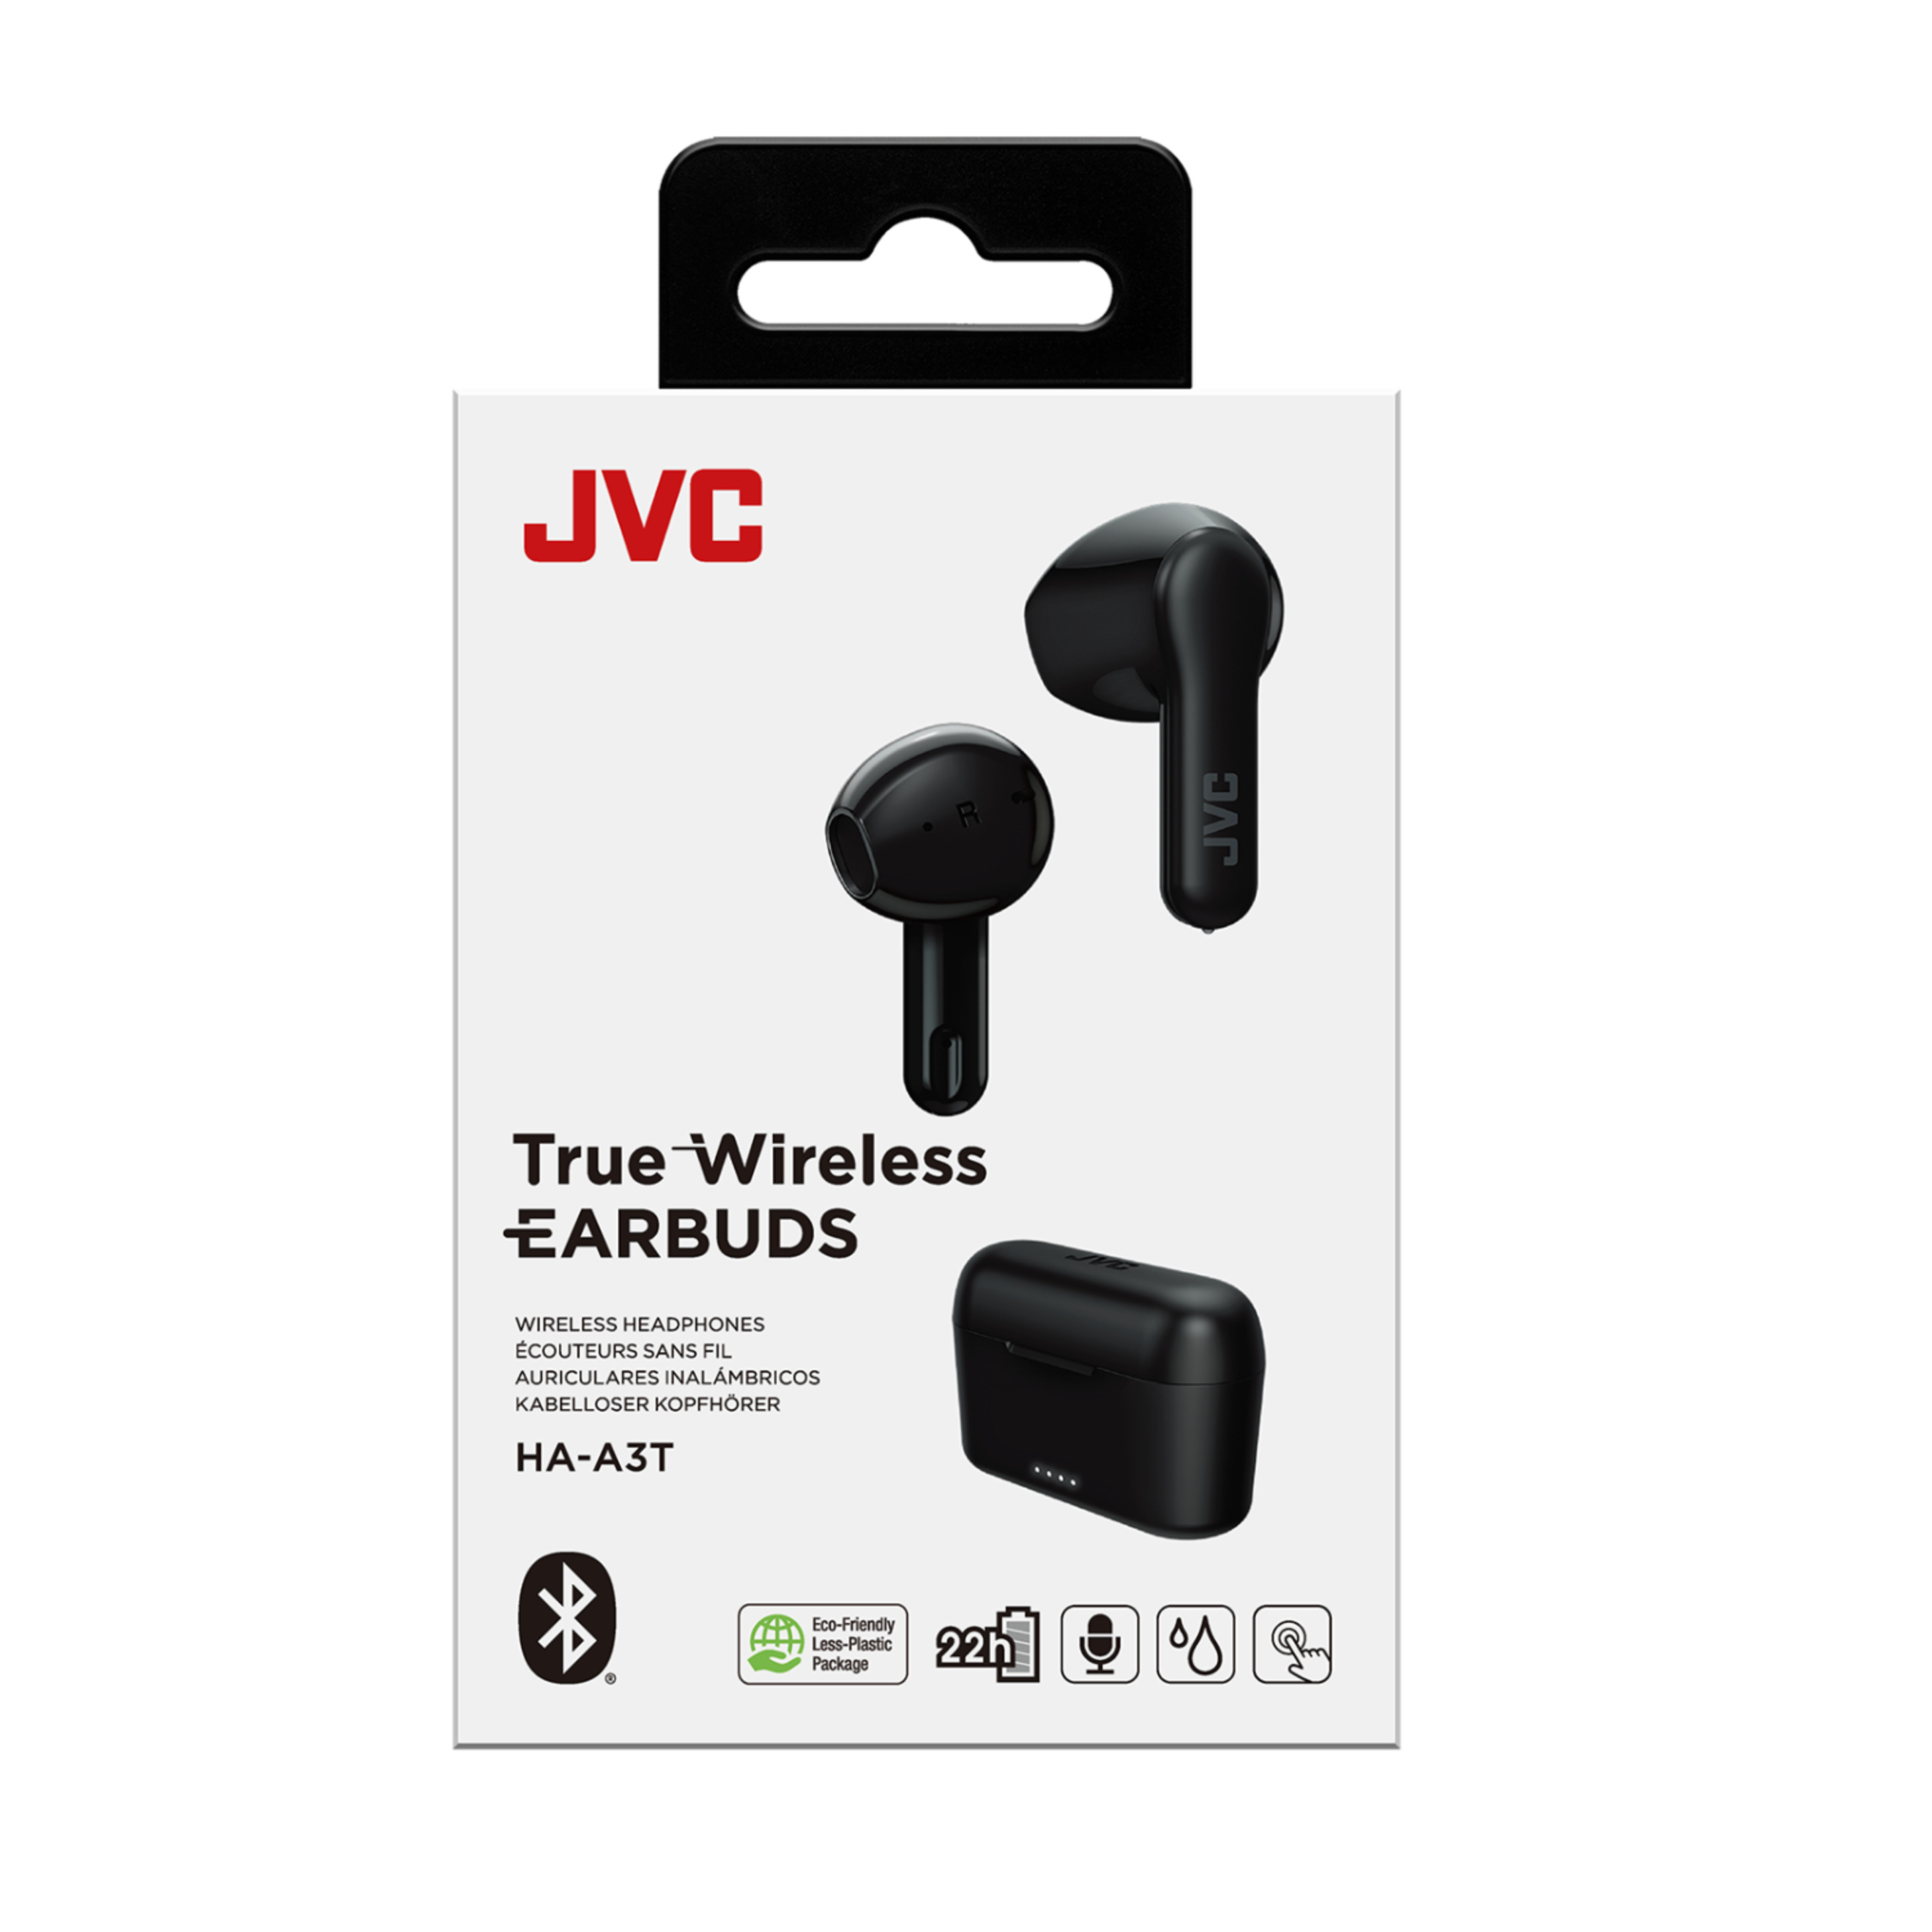 Auriculares Truewireless Bluetooth Jvc Ha-a3t-b-u - Negro - Truewireless 22h Bat Sensor Táctil  MKP